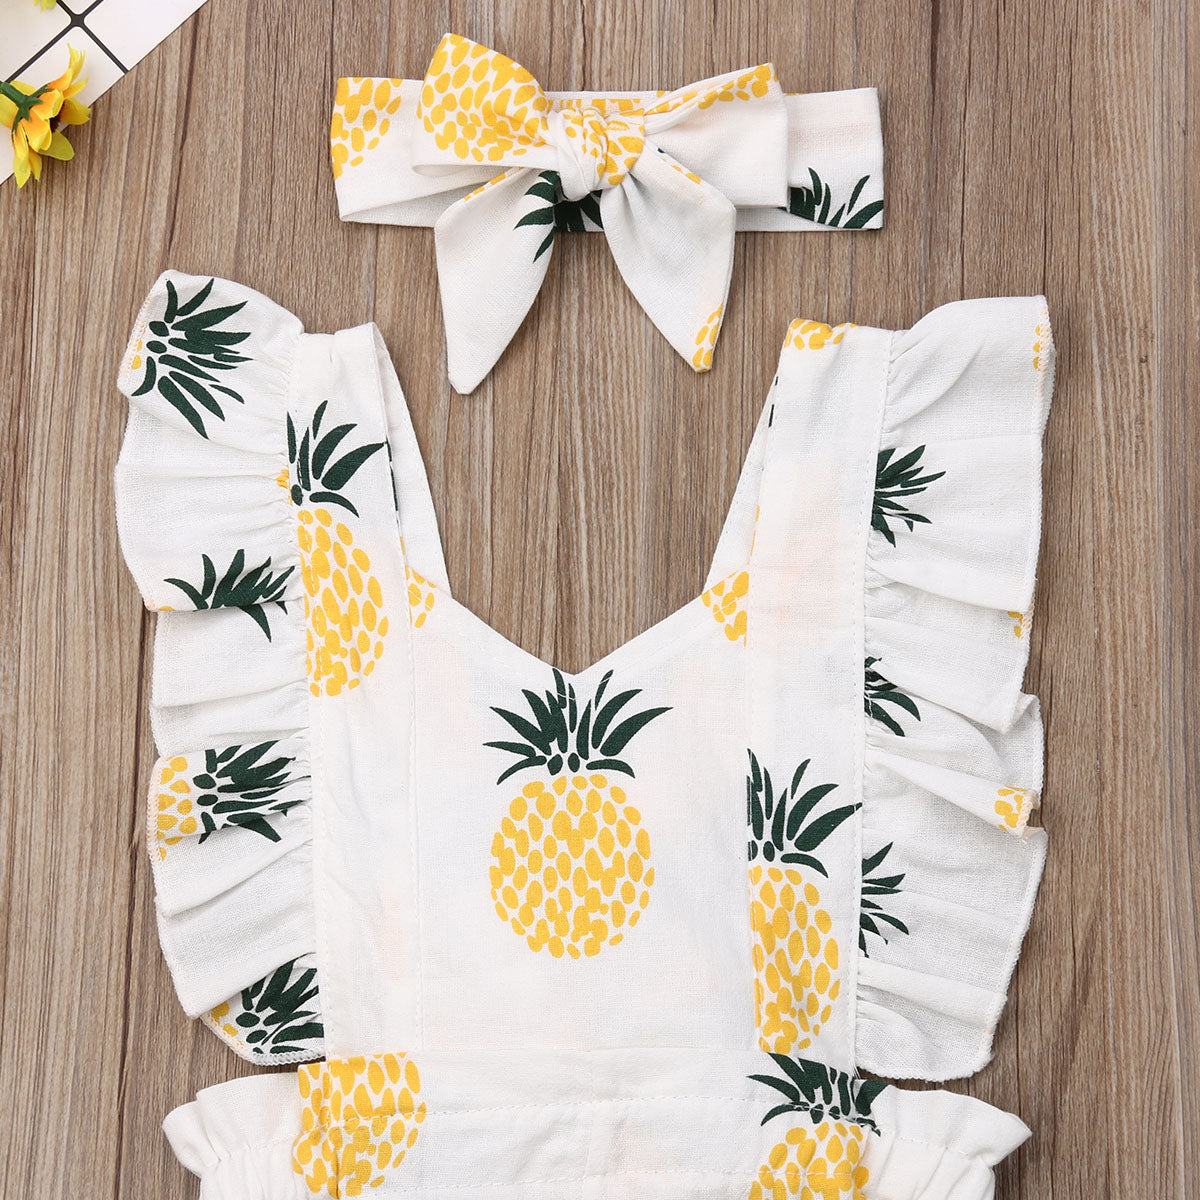 pineapple romper baby